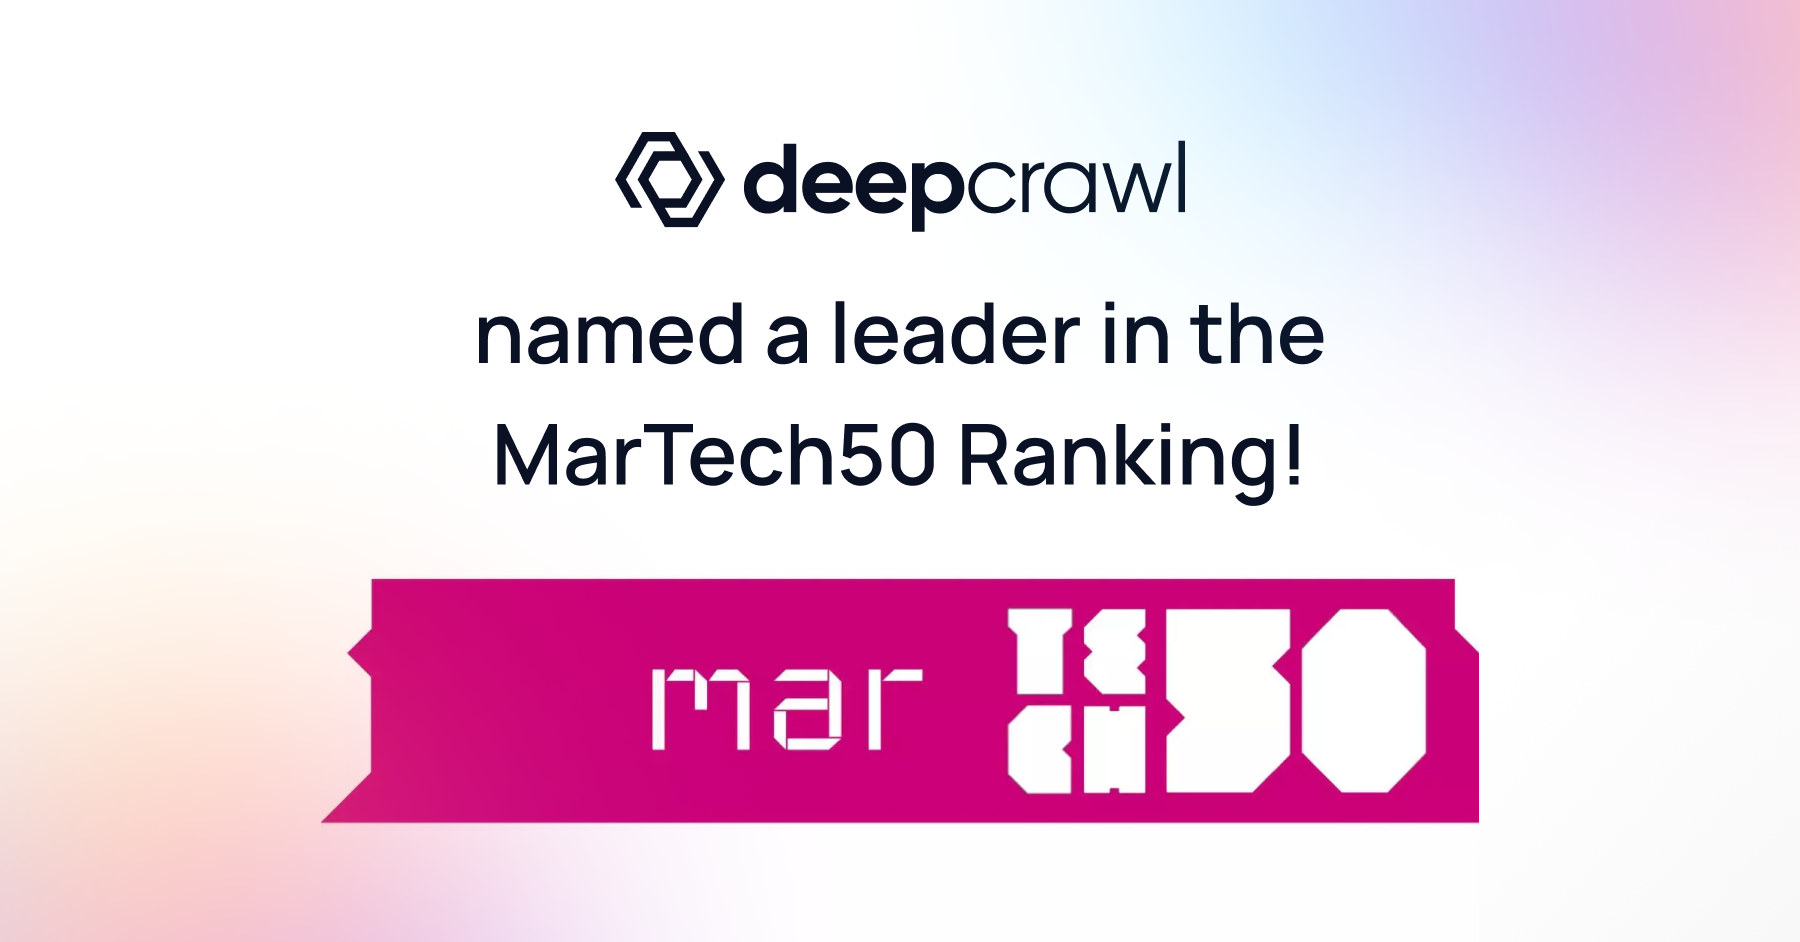 Deepcrawl a best in class MarTech leader in BusinessCloud's MarTech 50 ranking for 2022